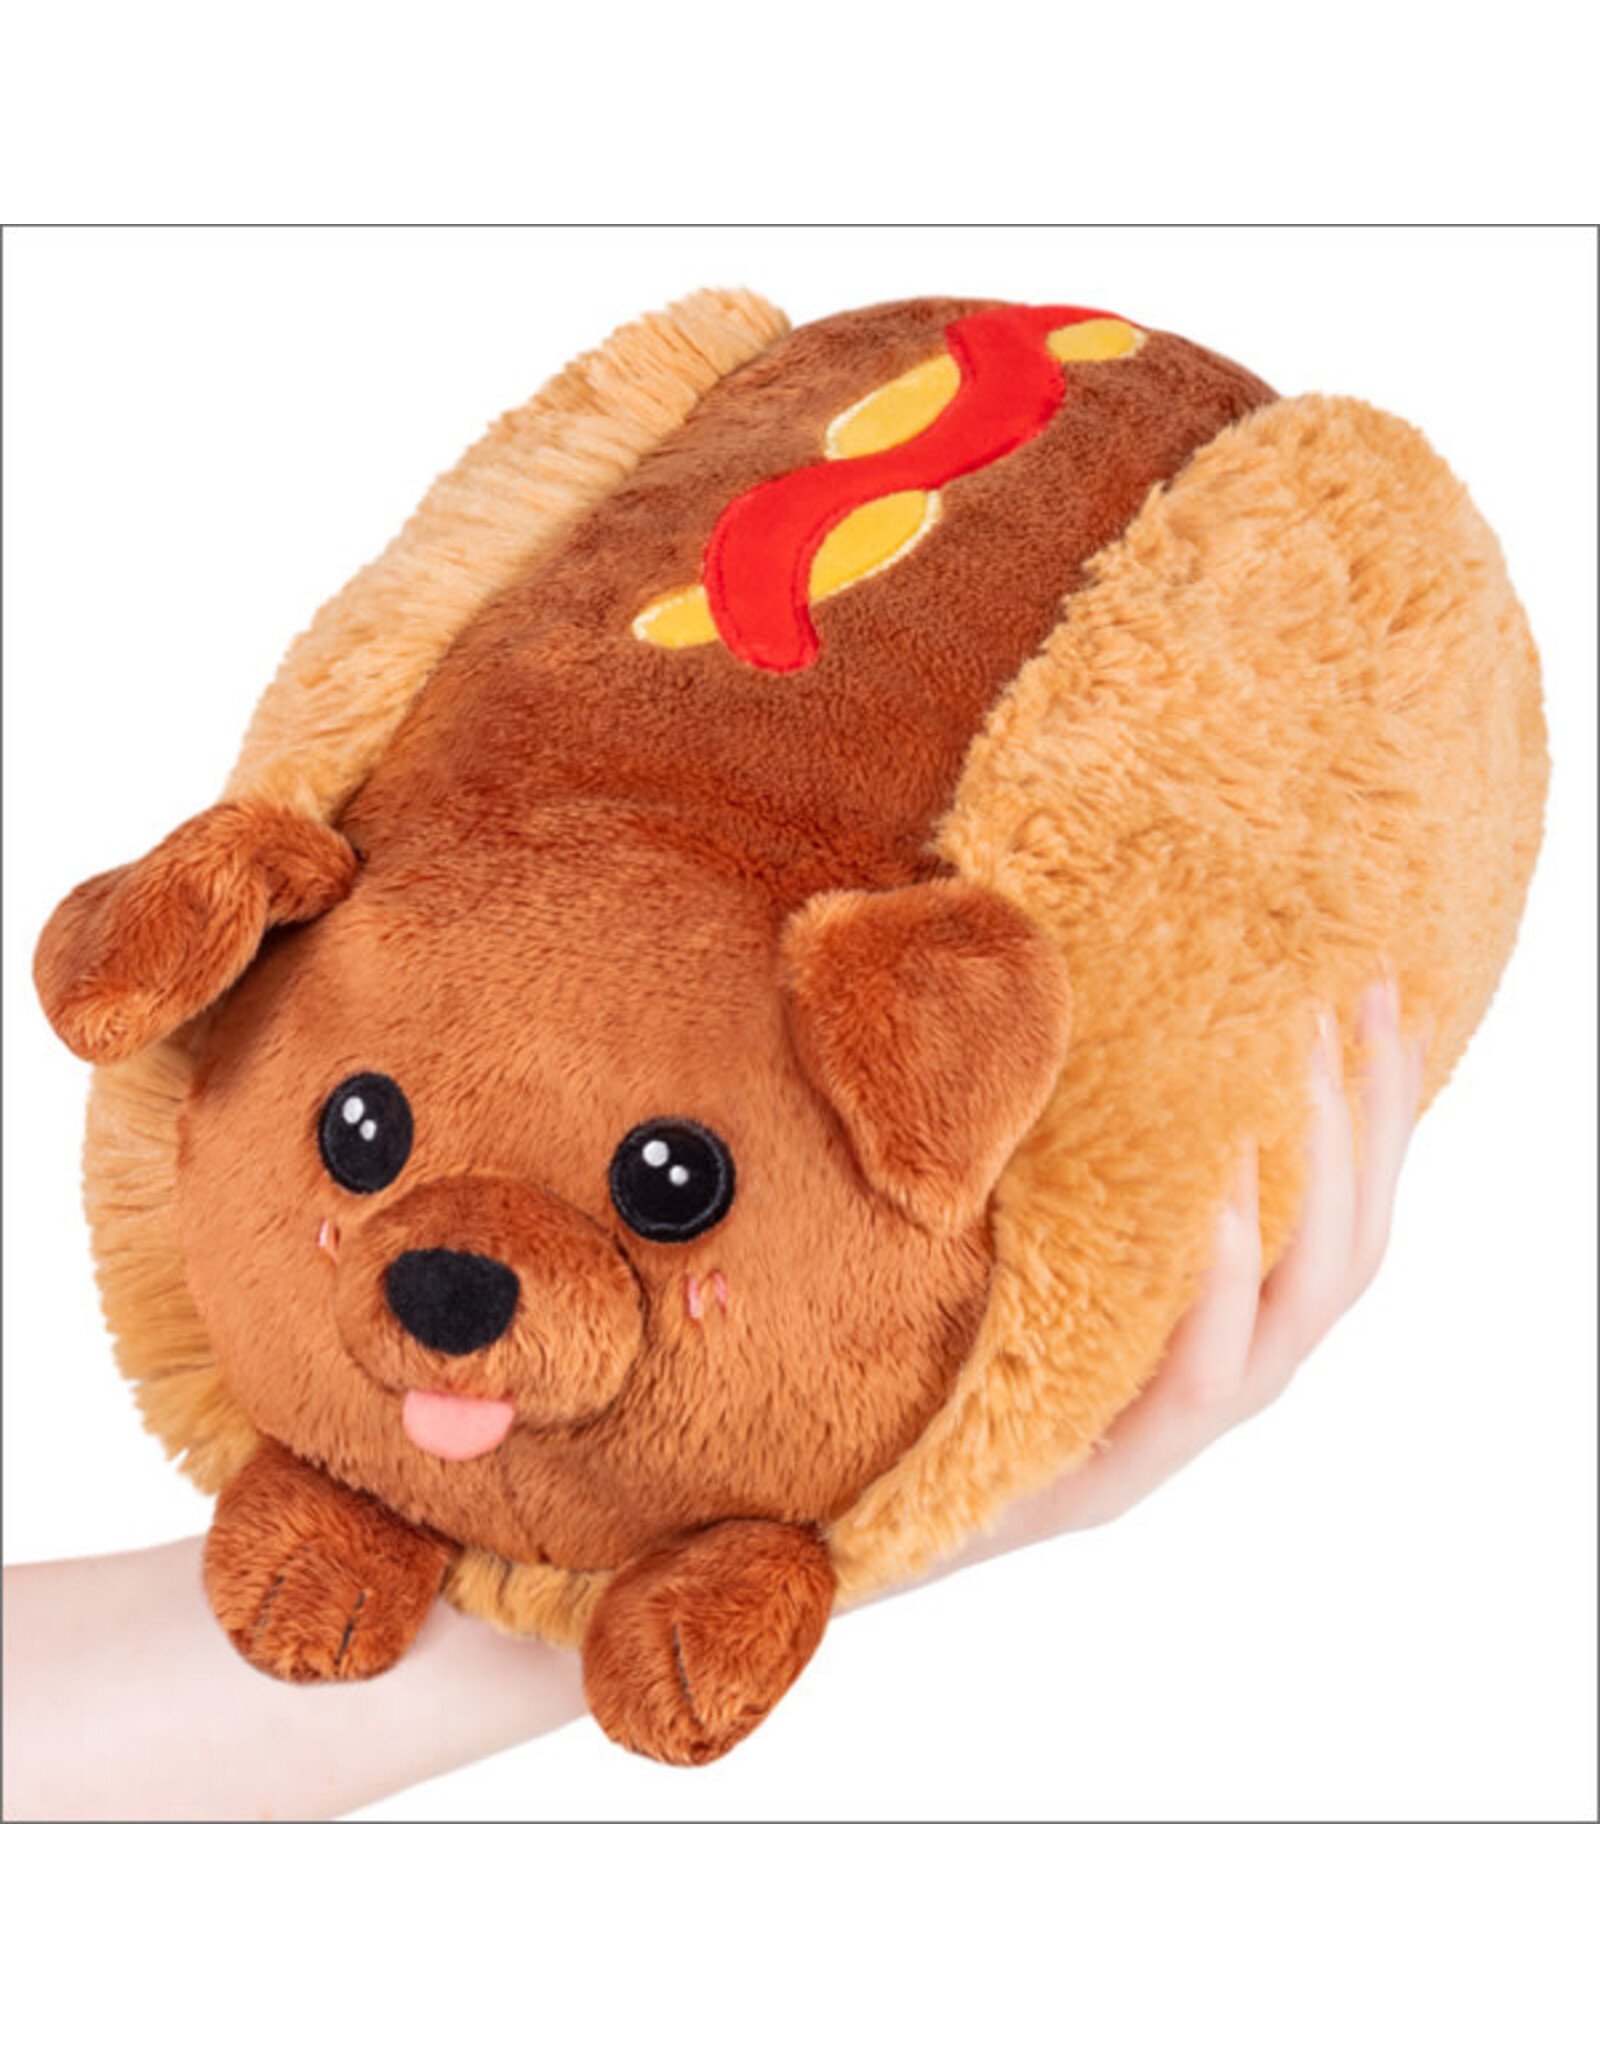 Squishable Dachshund Hot Dog - mini